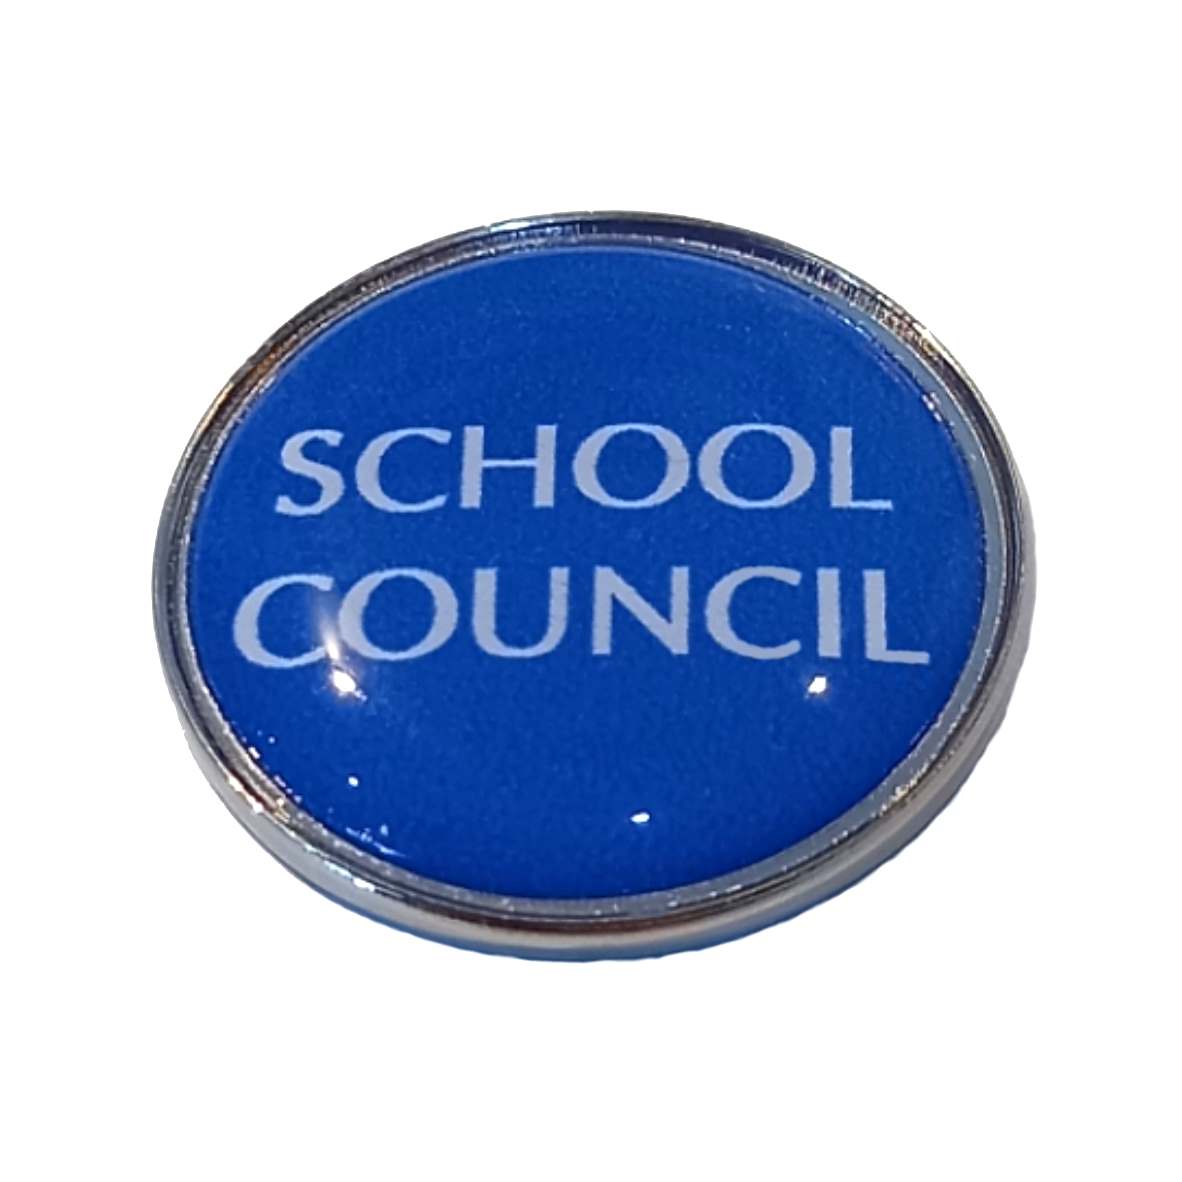 SCHOOL COUNCIL round BLUE